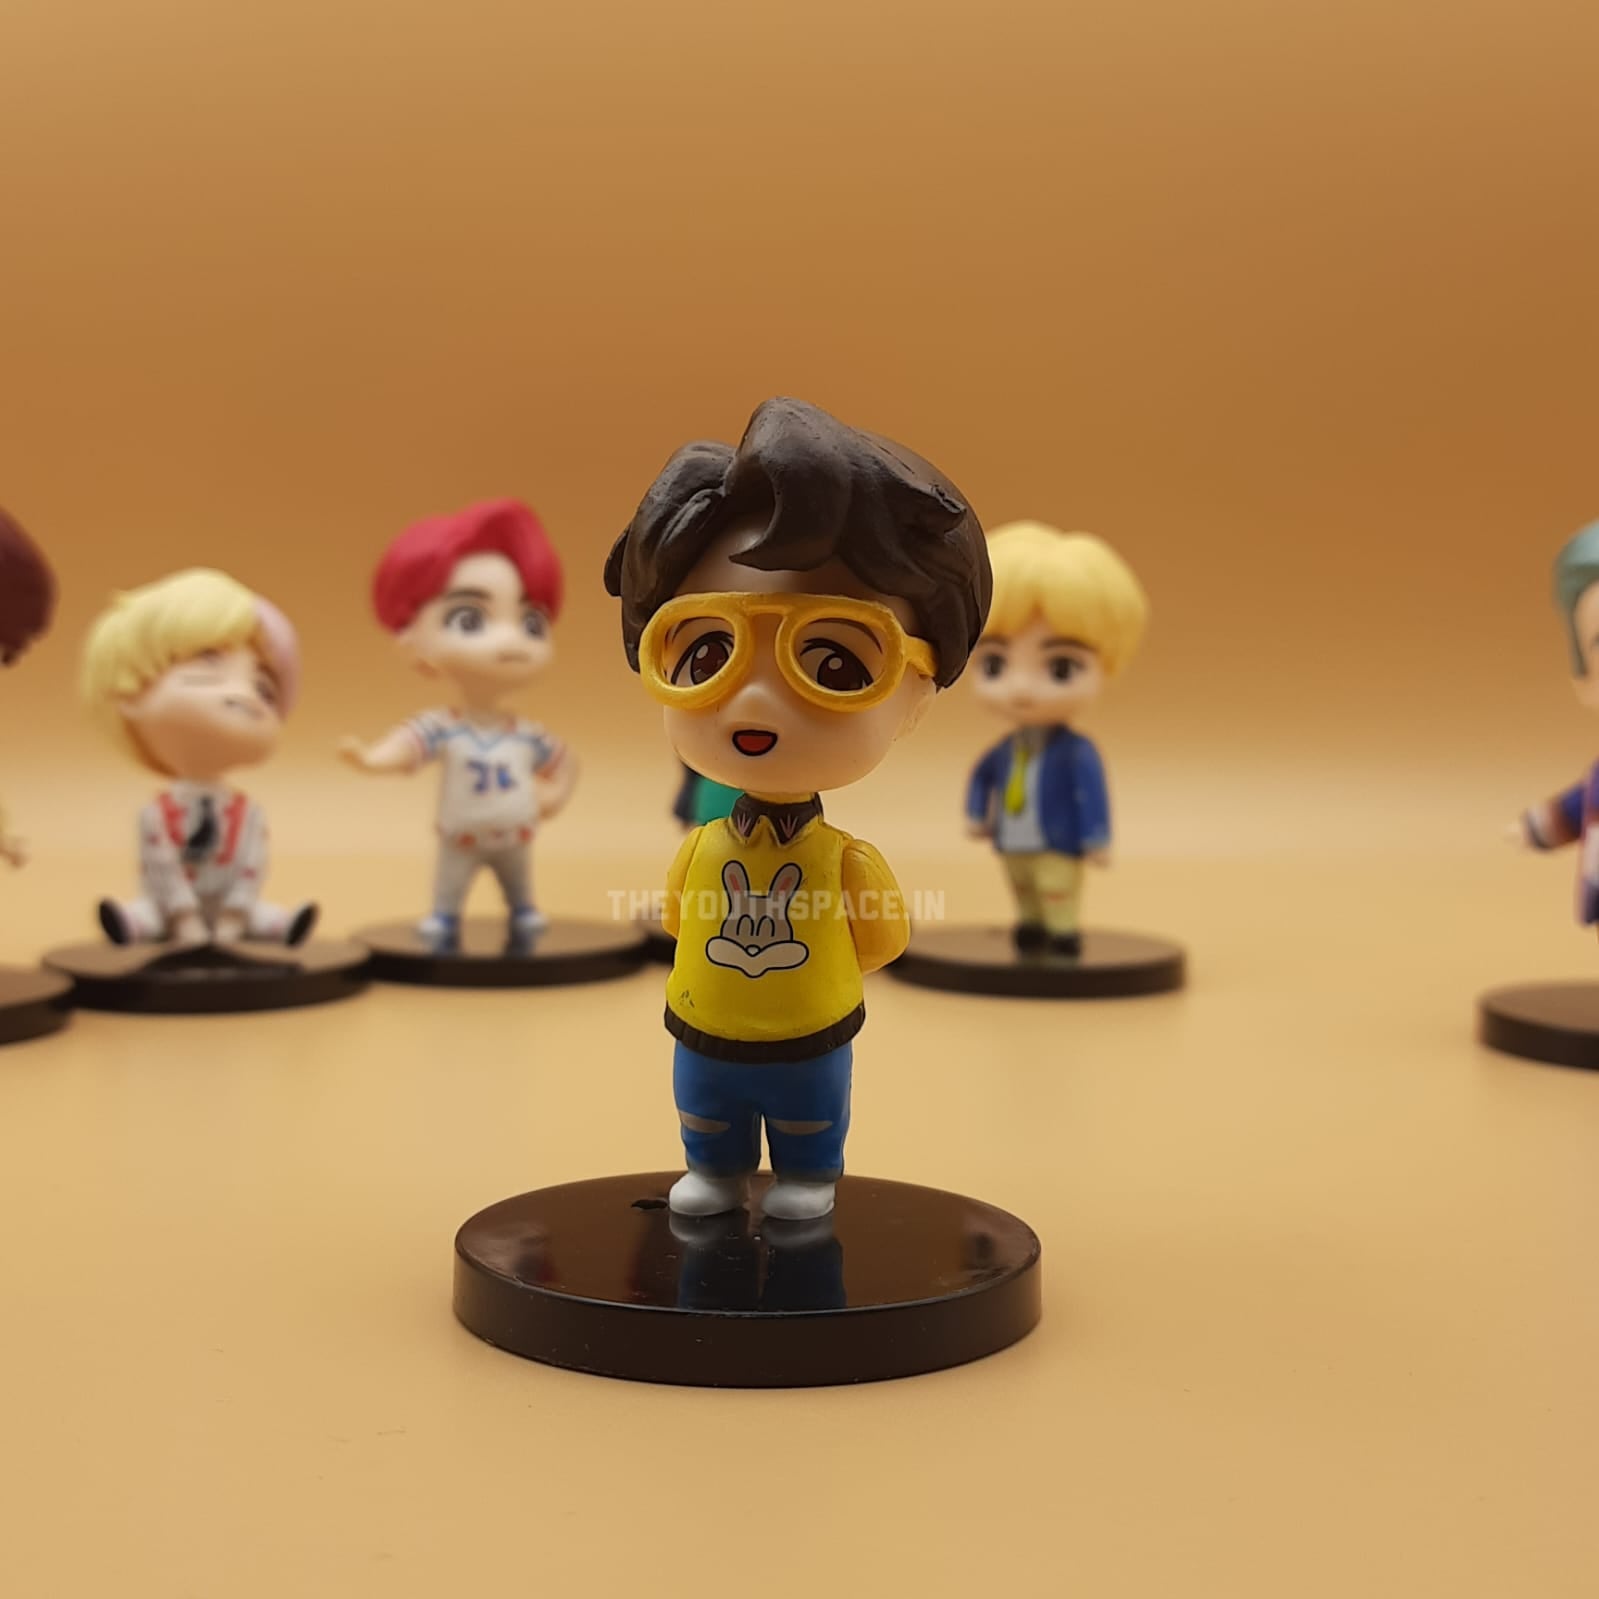 Tiny Tan Idol Set (Set of 7 Figurines)